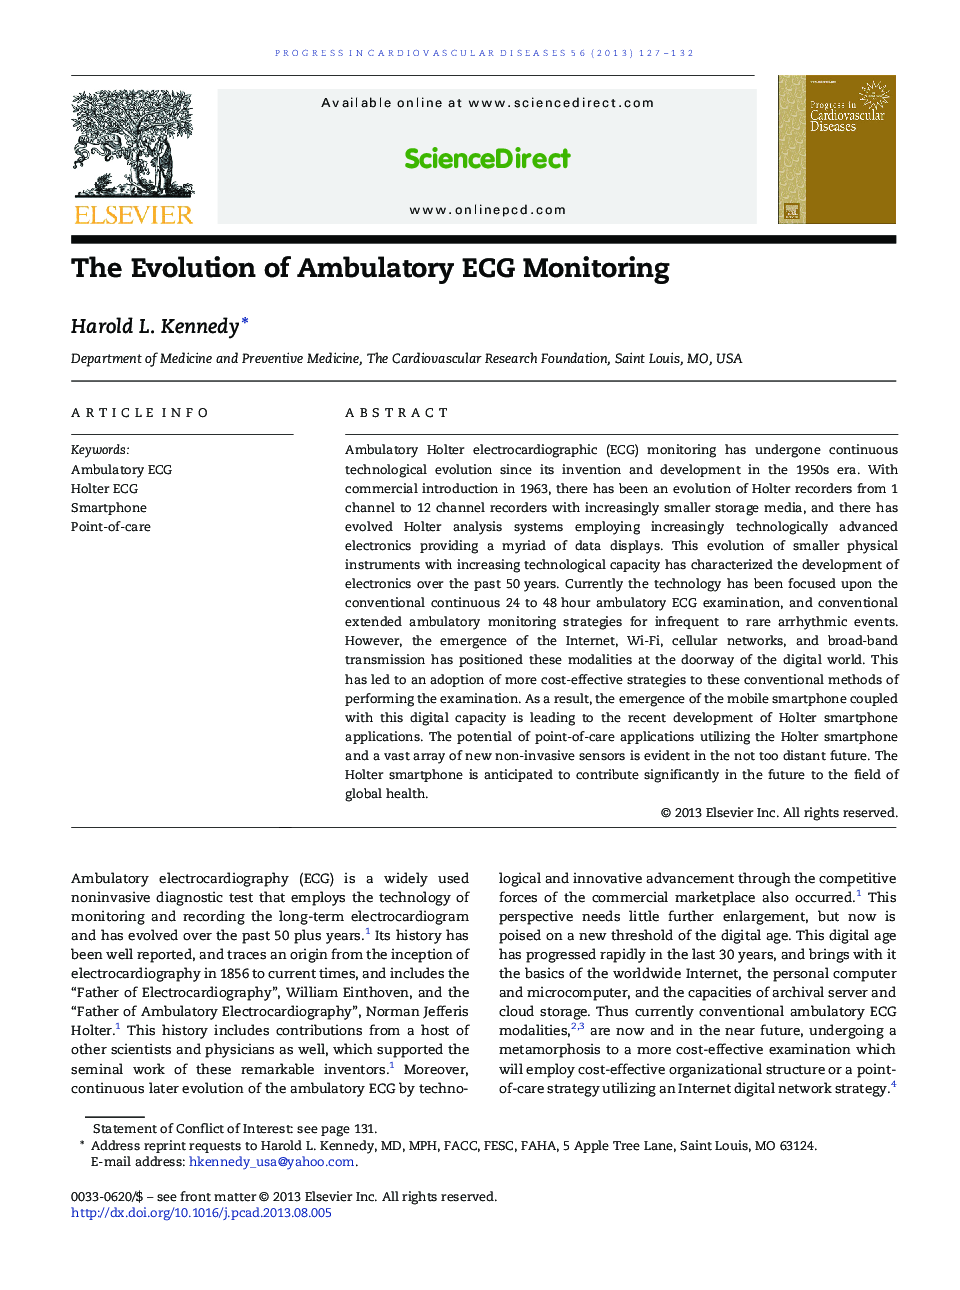 The Evolution of Ambulatory ECG Monitoring 